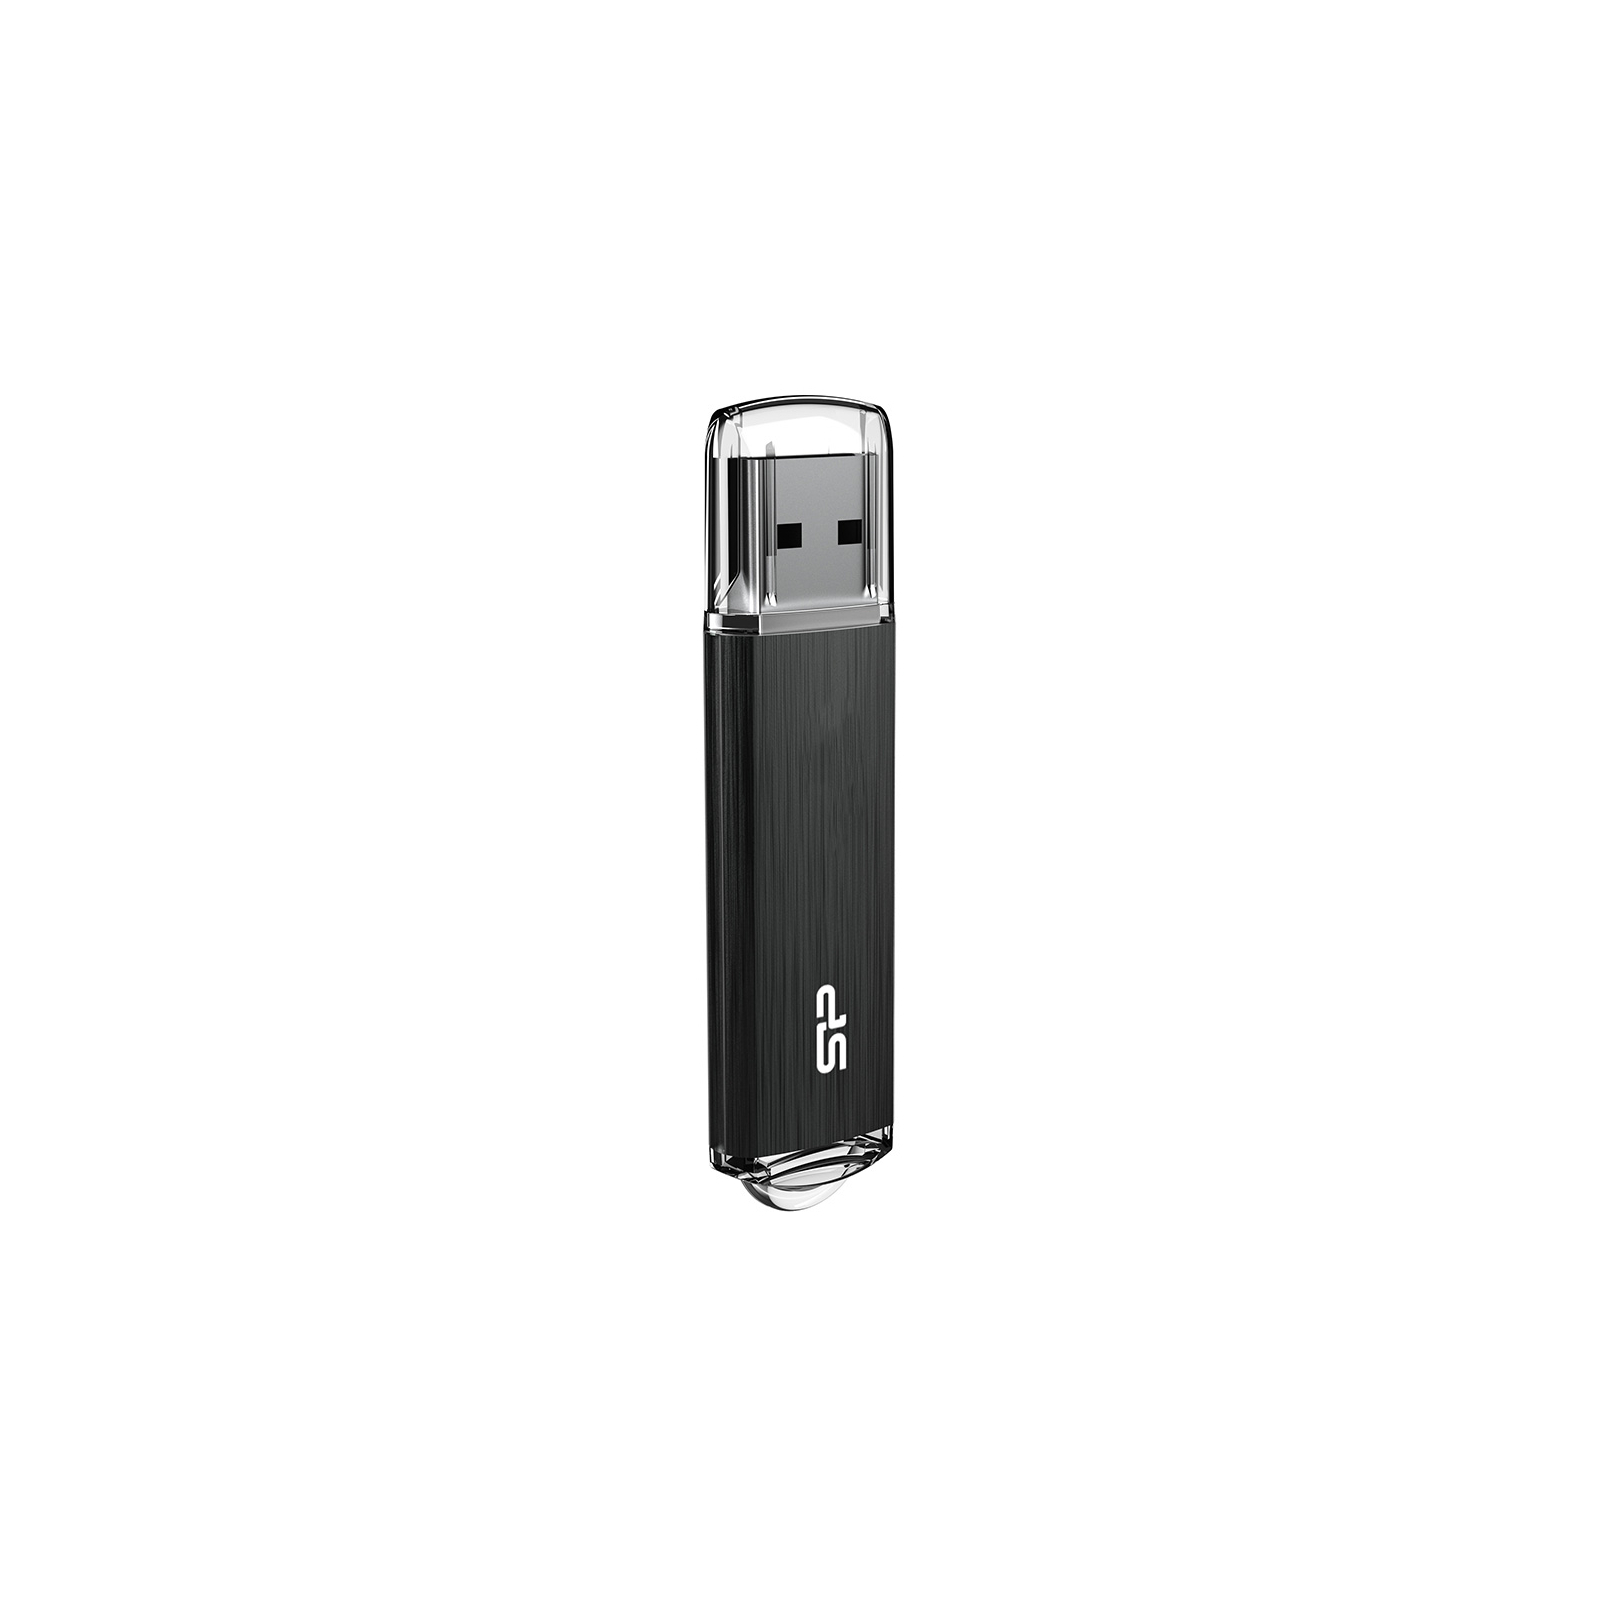 USB флеш накопитель Silicon Power 250 GB Silicon Marvel Xtreme M80 USB 3.2 (SP250GBUF3M80V1G) изображение 2